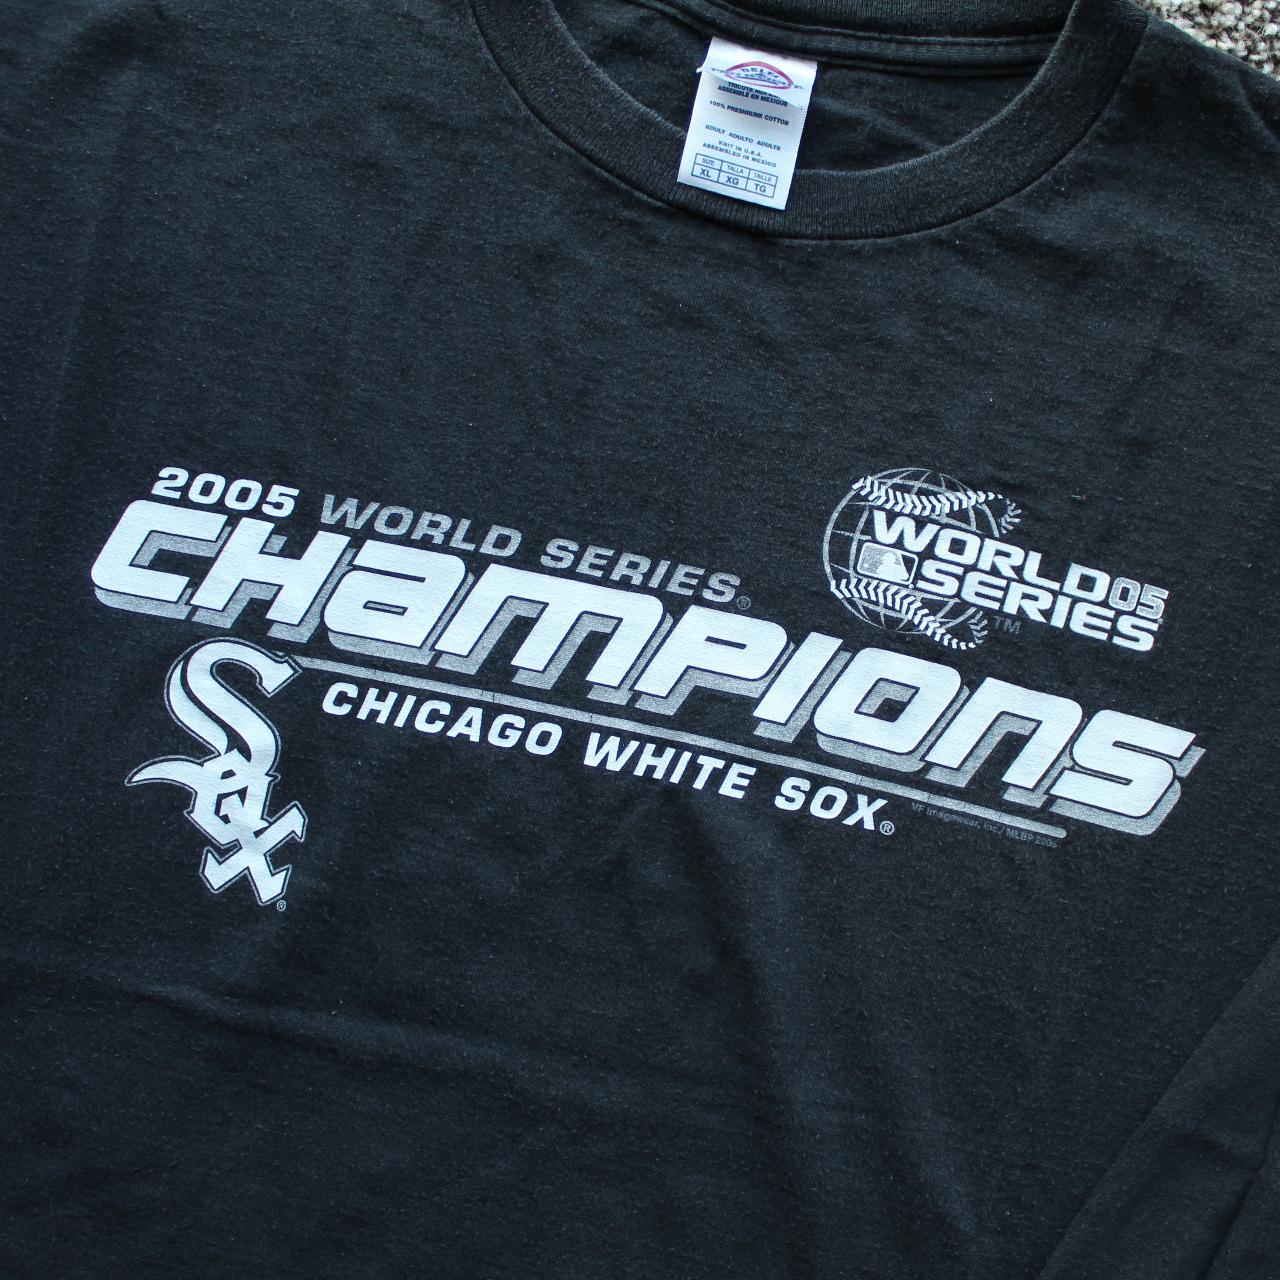 chicago white sox world series shirt